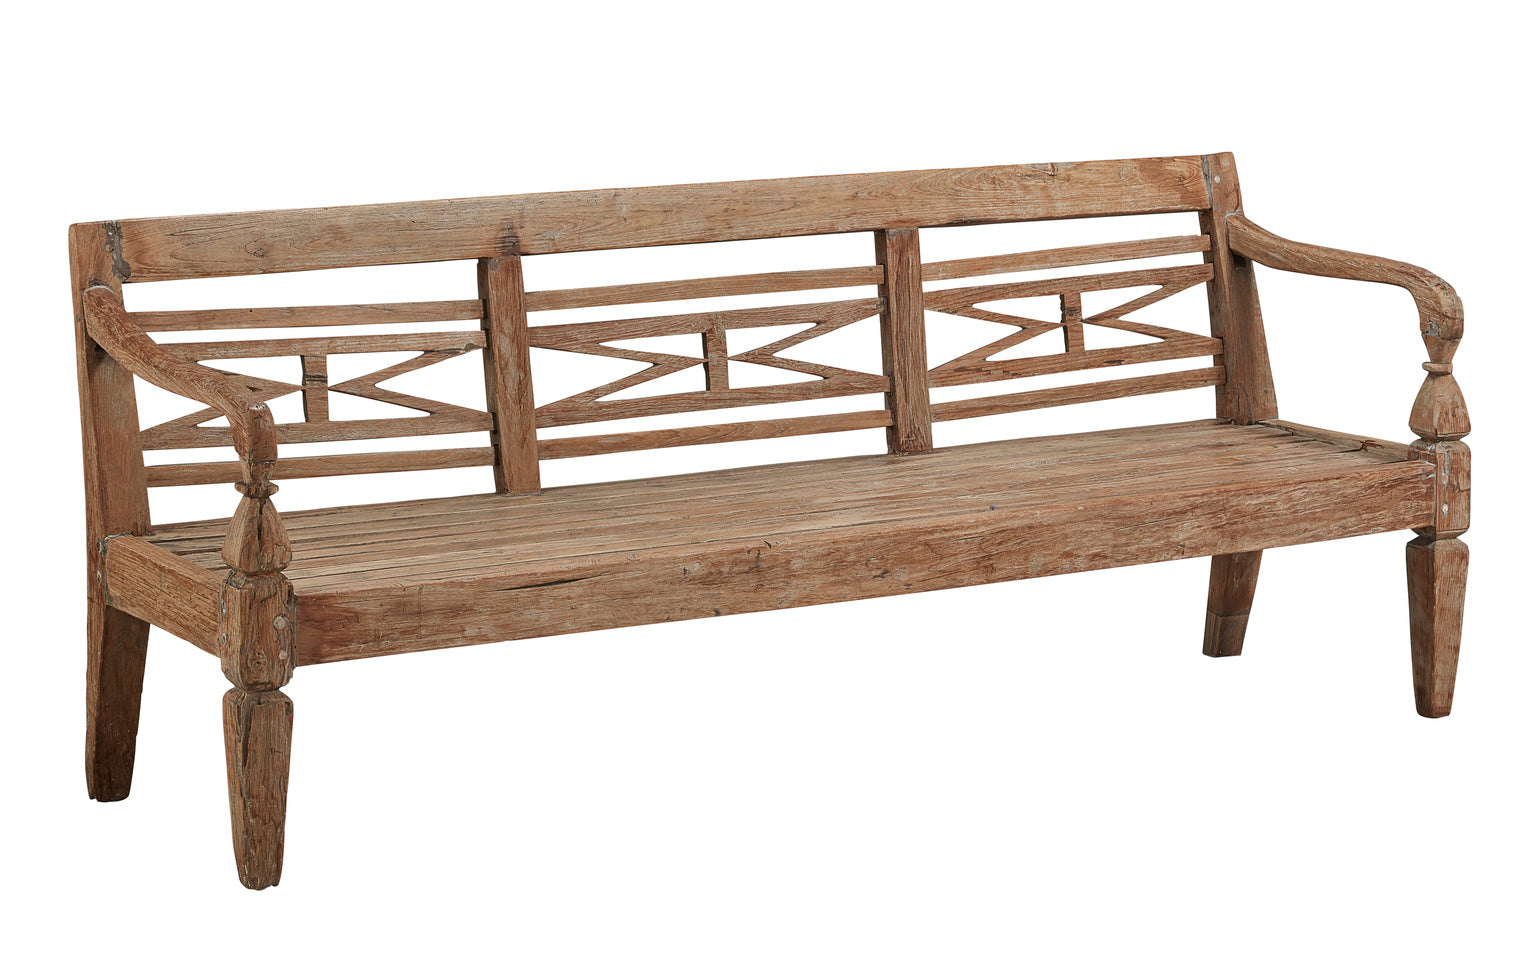 restoration hardware Teak Wood outdoor bench for sale, English Outdoor Wooden Bench for sale